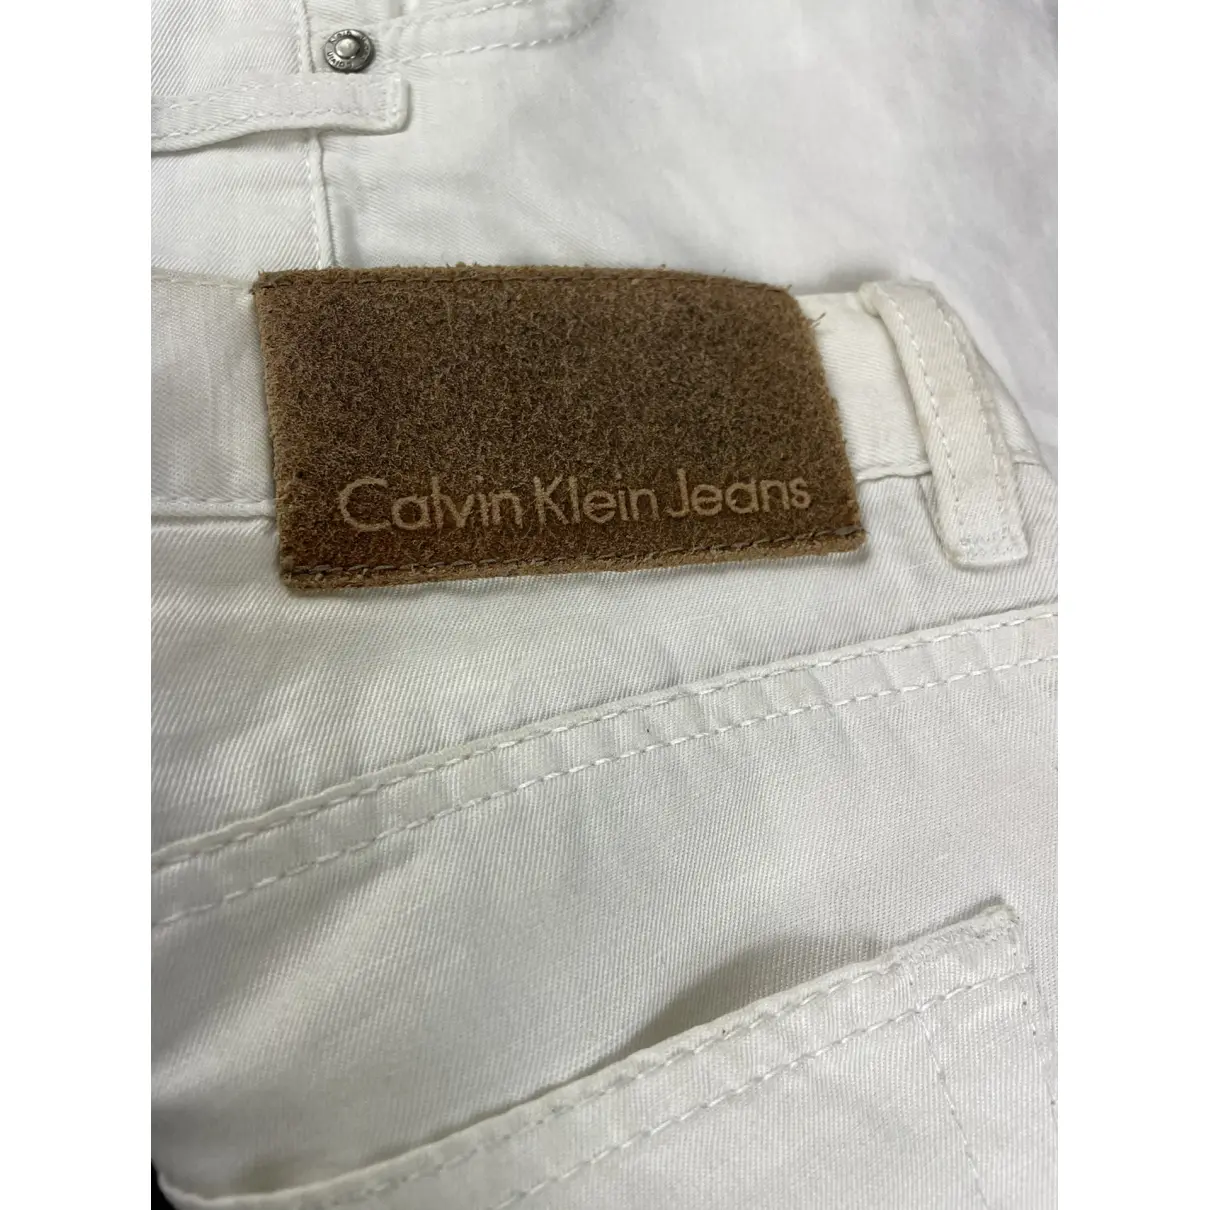 Buy Calvin Klein Trousers online